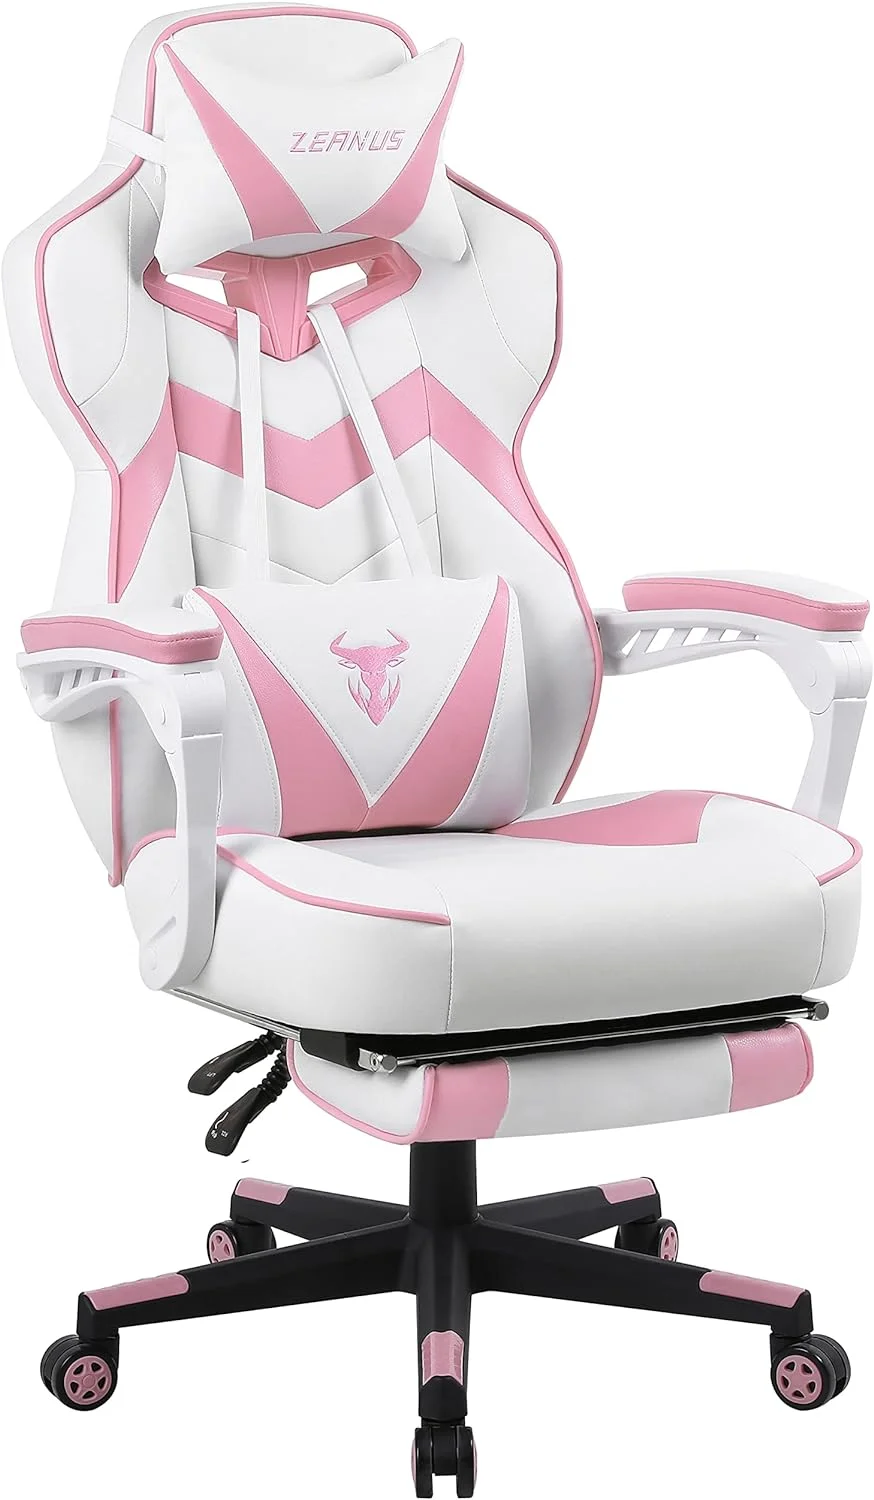 5 Best Pink Gaming Chair Under $100 - $200 in 2023 - Top Picks - Gamers ...